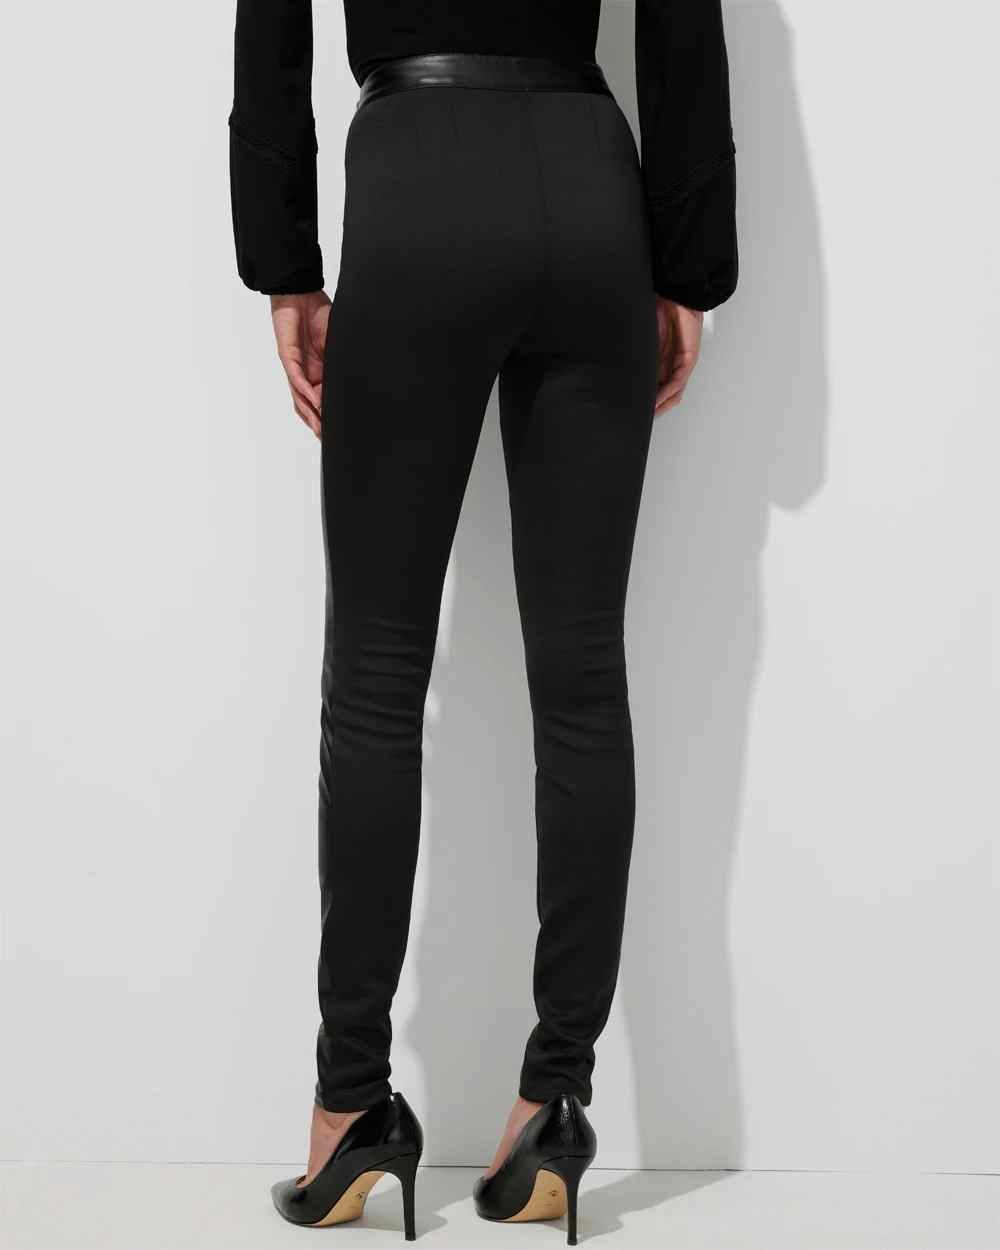 Shop Women's Pants on Sale | White House Black Market